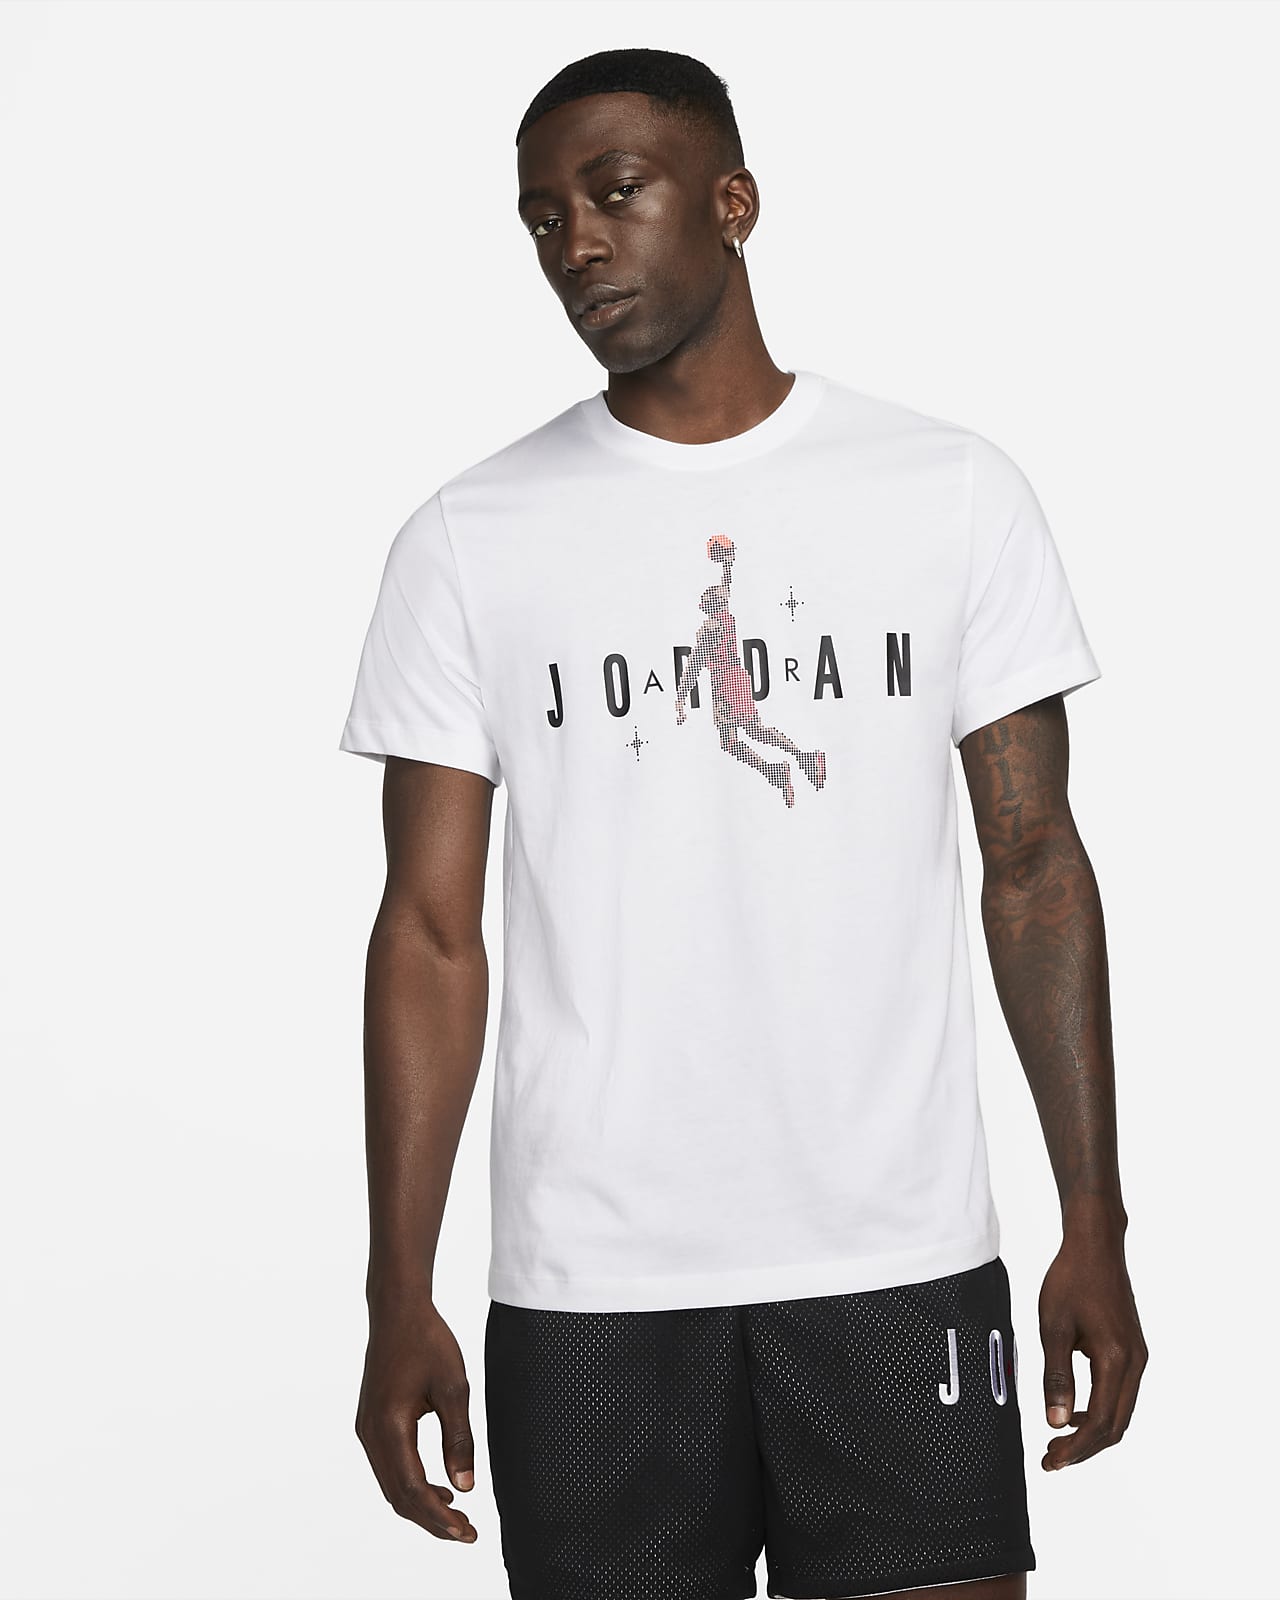 Jordan Brand Holiday Men's Short-Sleeve T-Shirt